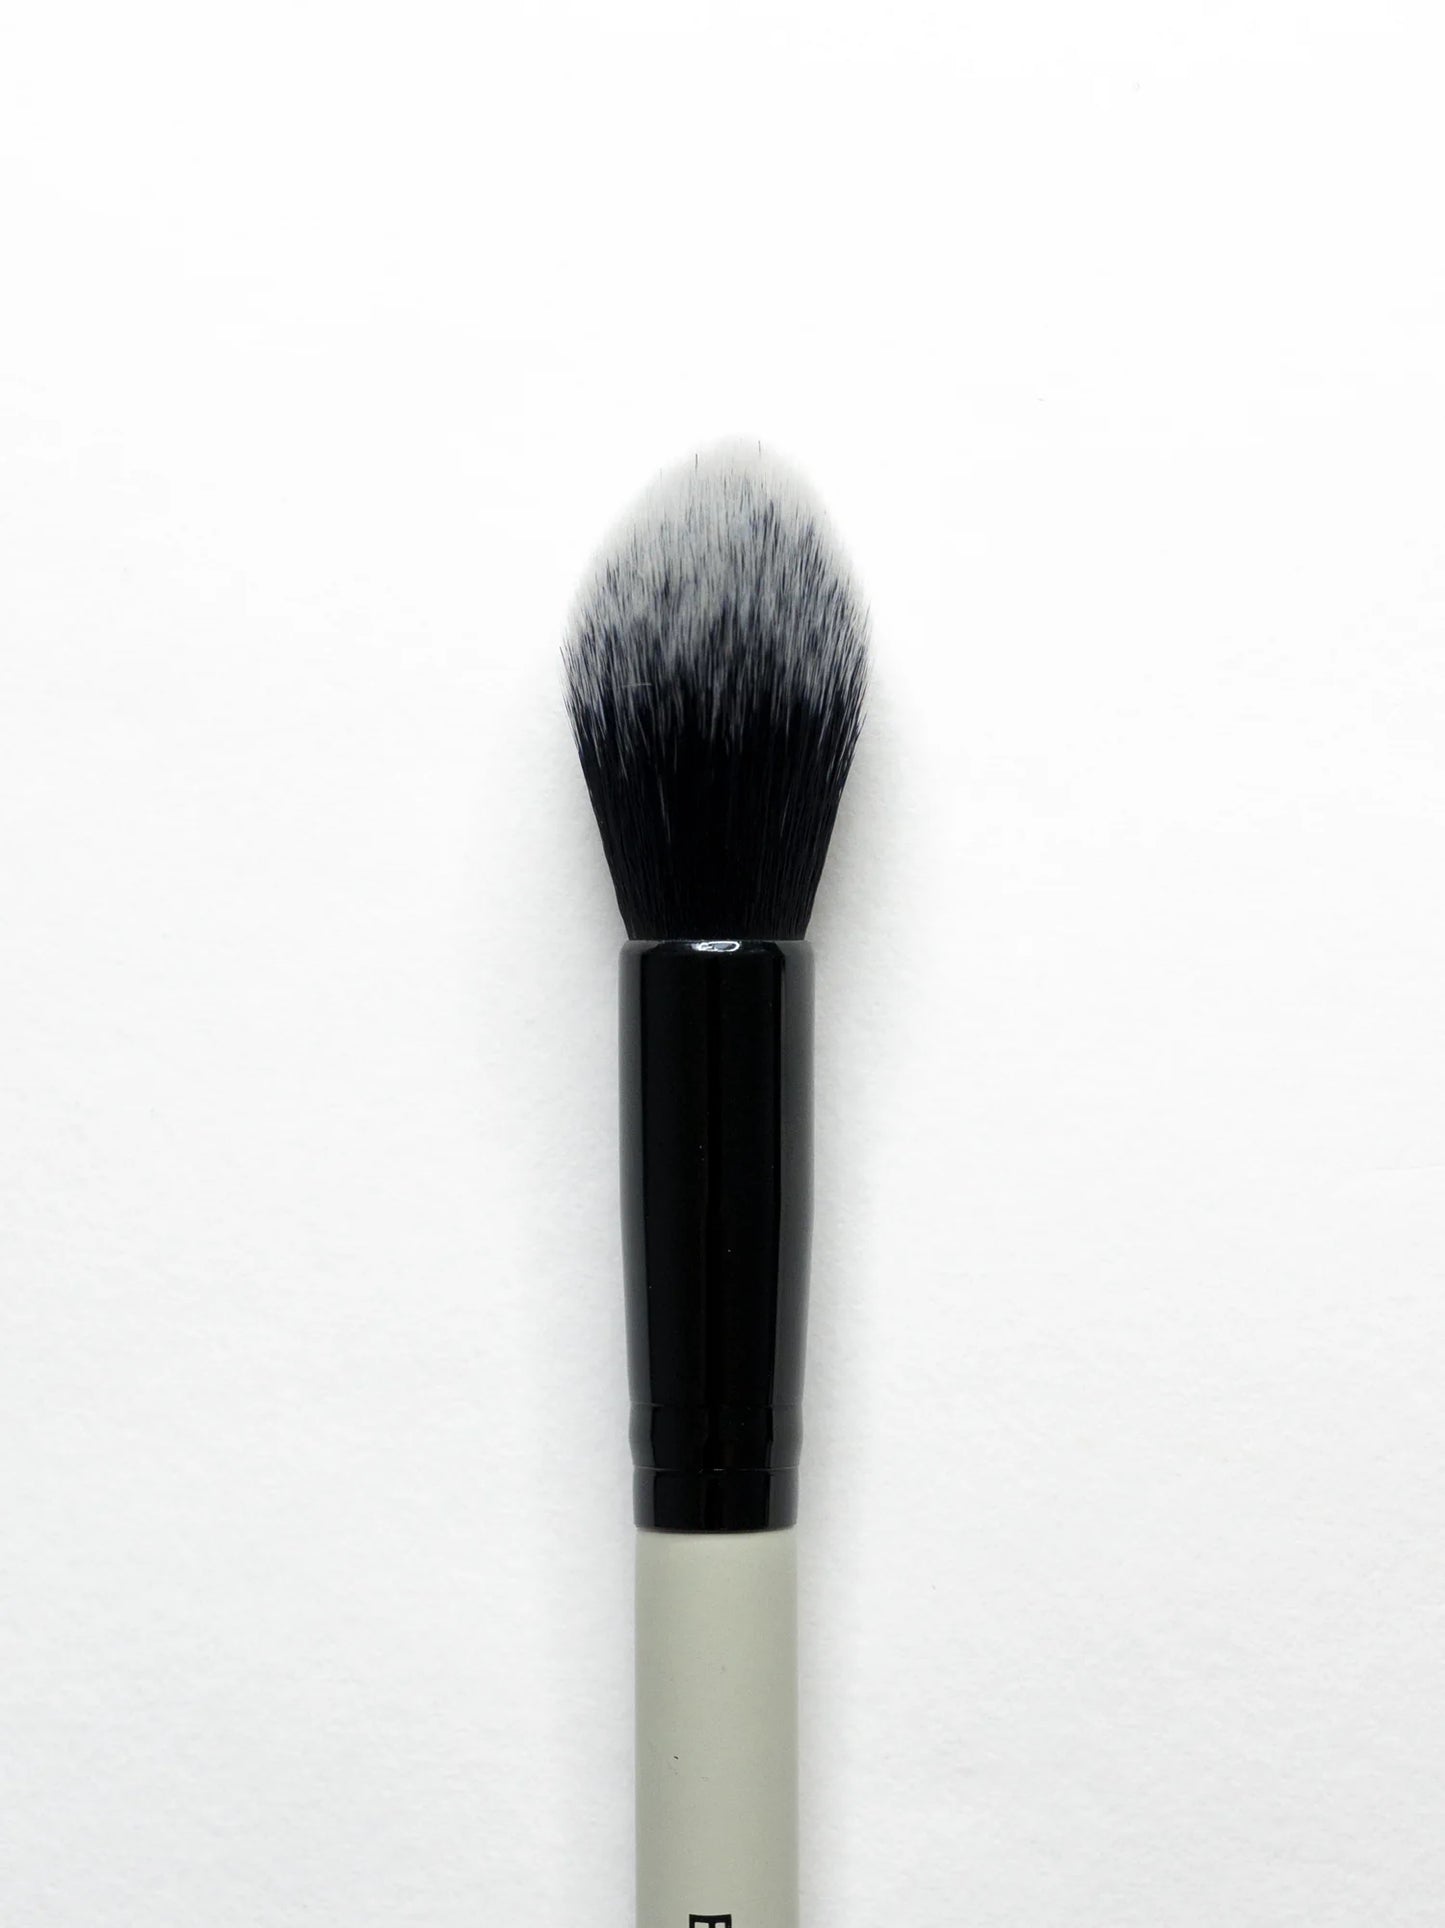 Small Powder Brush 38 Make-up Brush EDY LONDON Cool Grey   - EDY LONDON PRODUCTS UK - The Best Makeup Brushes - shop.edy.london